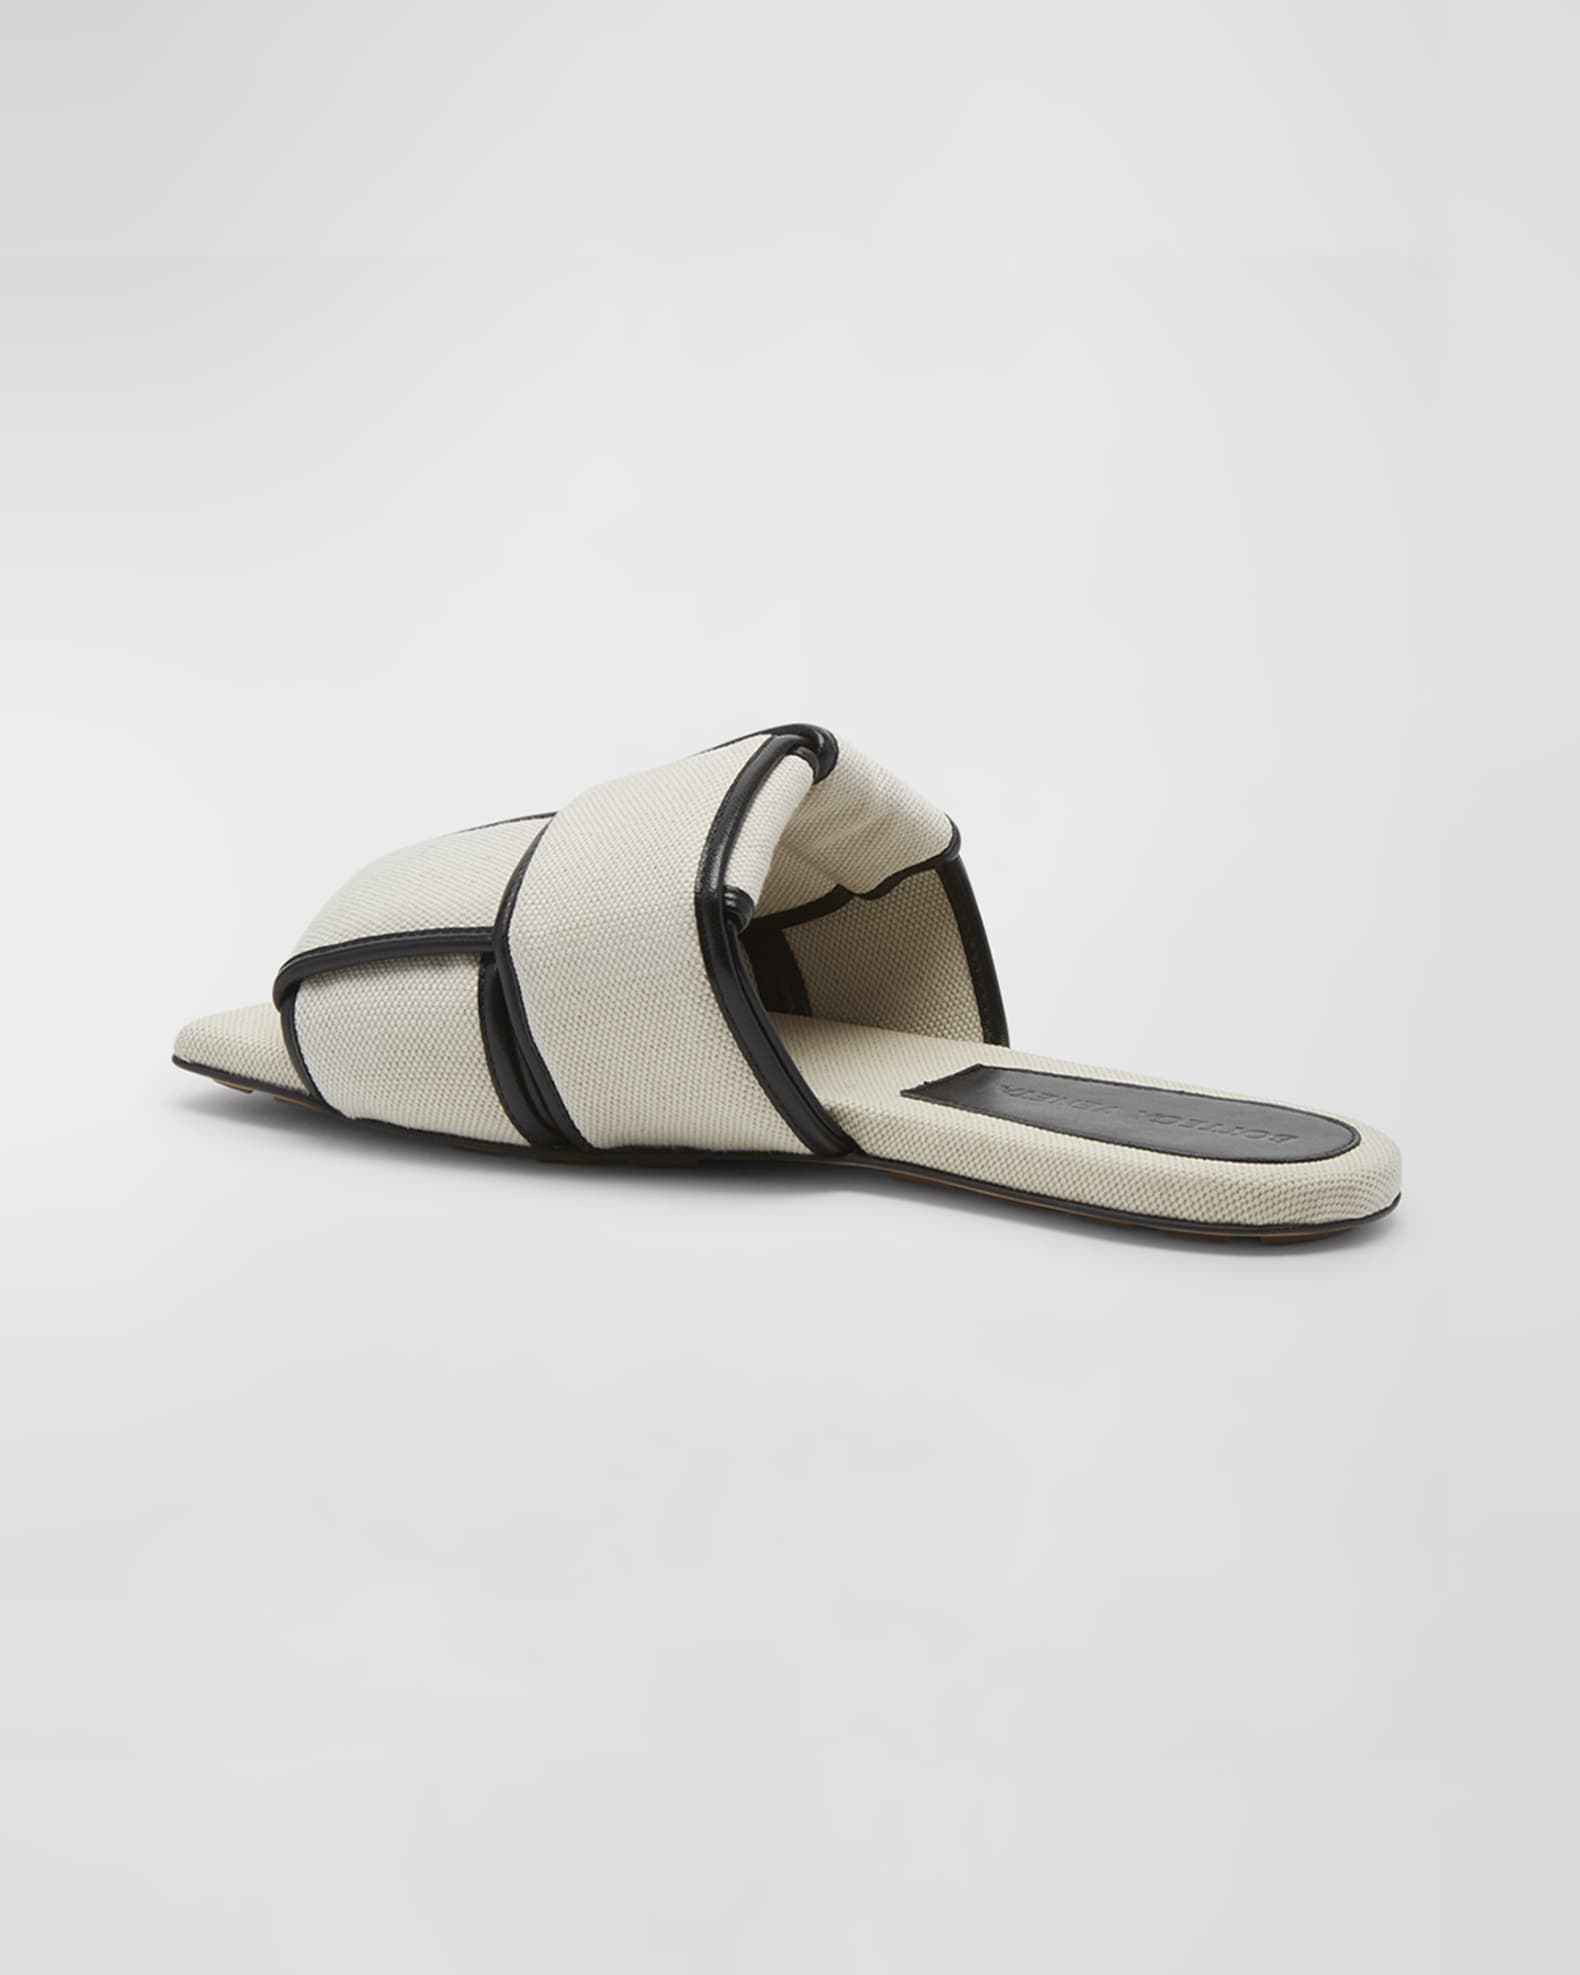 Bottega Veneta Canvas Patch Mule Flat Sandals | Neiman Marcus